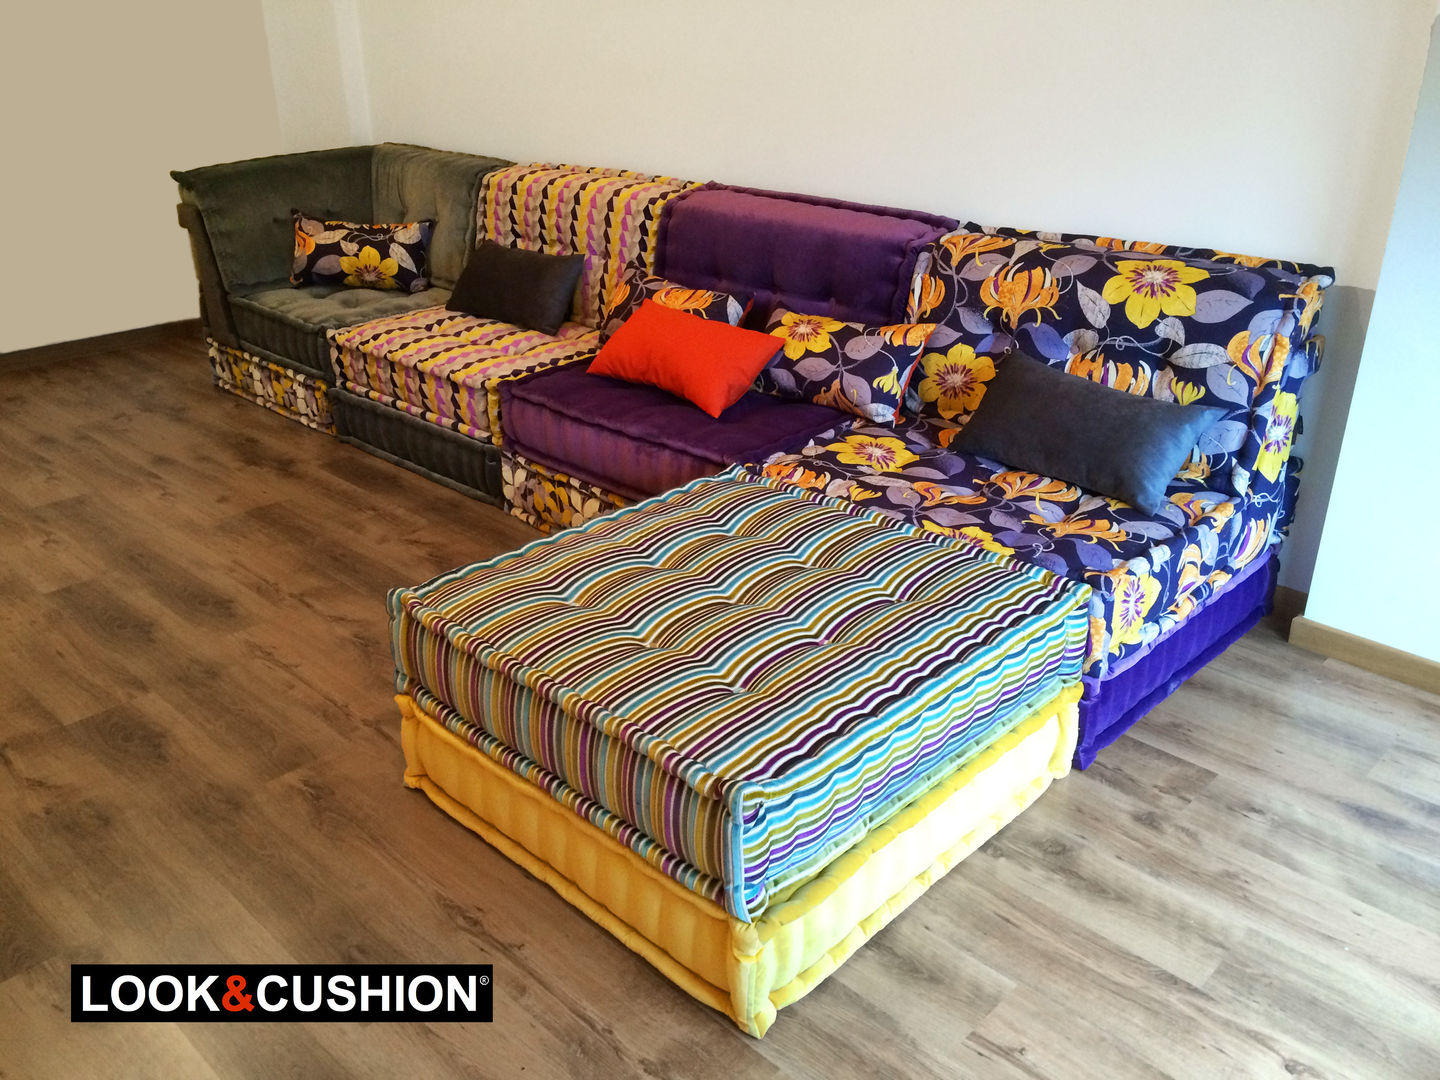 Sofá modular modelo "Craft" - Arcade - Galicia, LOOK & CUSHION LOOK & CUSHION Modern living room Sofas & armchairs